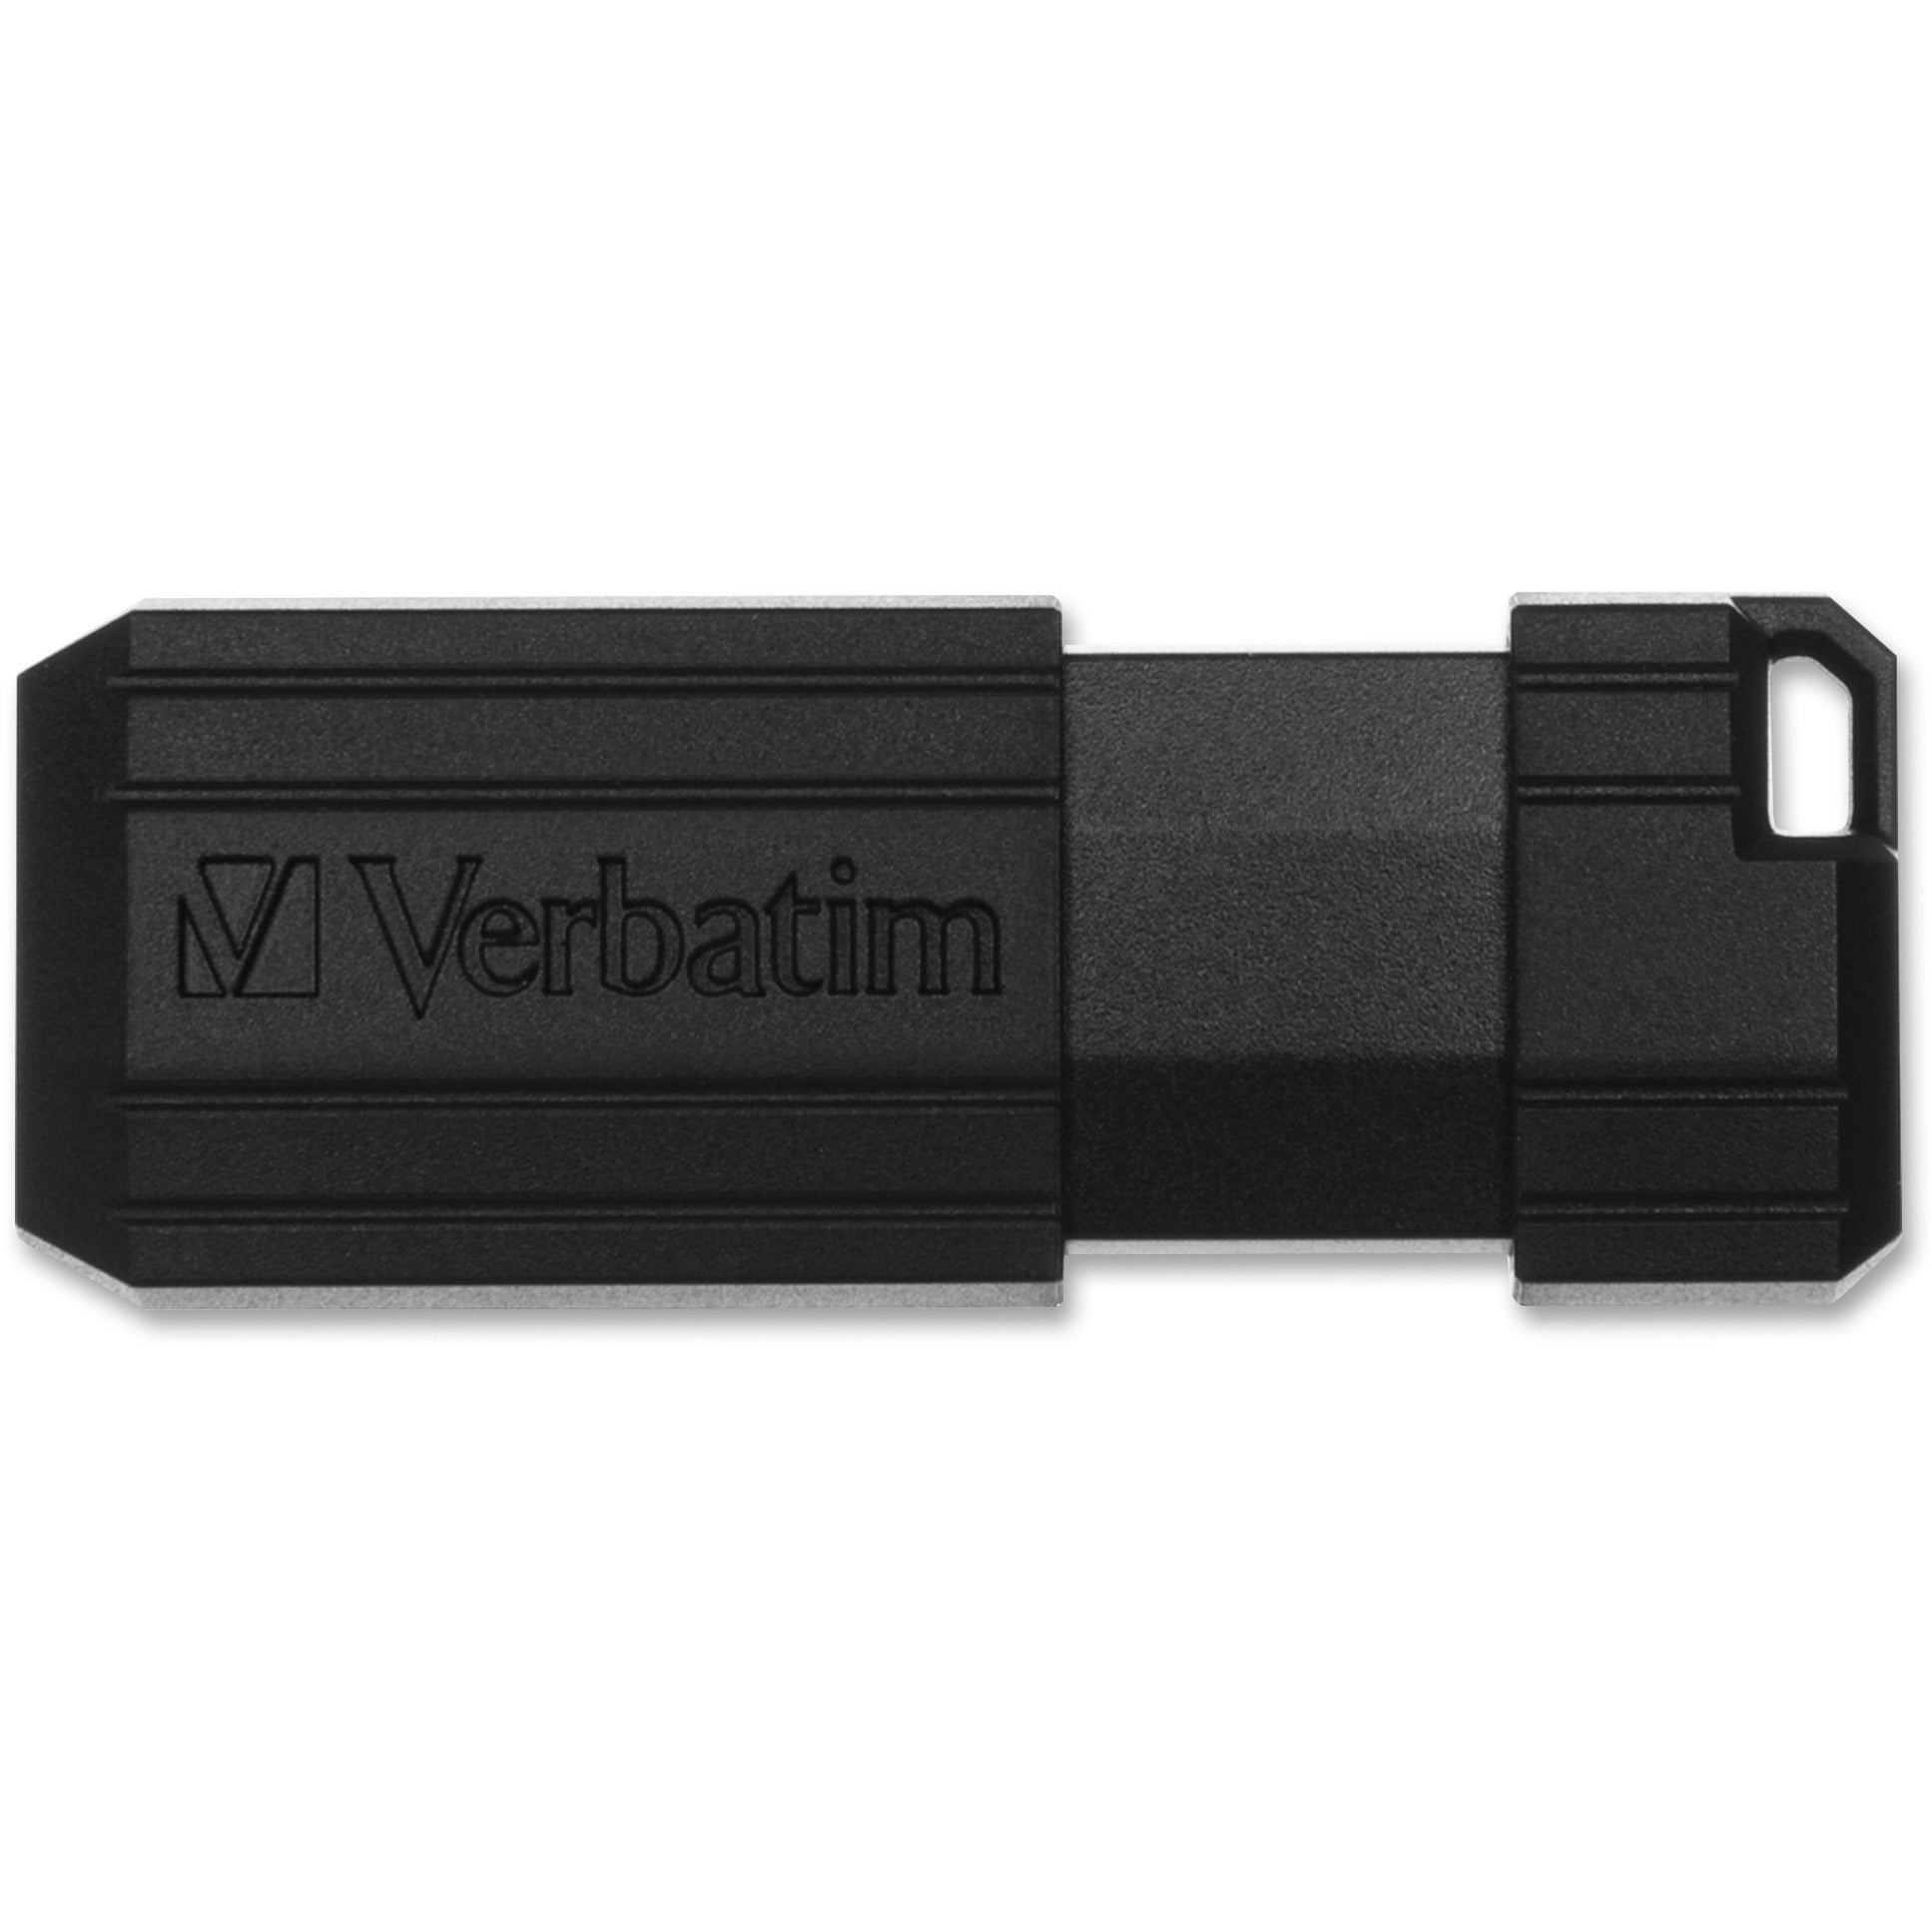 verbatim-pinstripe-usb-flash-drives-8-gb-usb-20-black-5-bundle_ver49062bd - 3